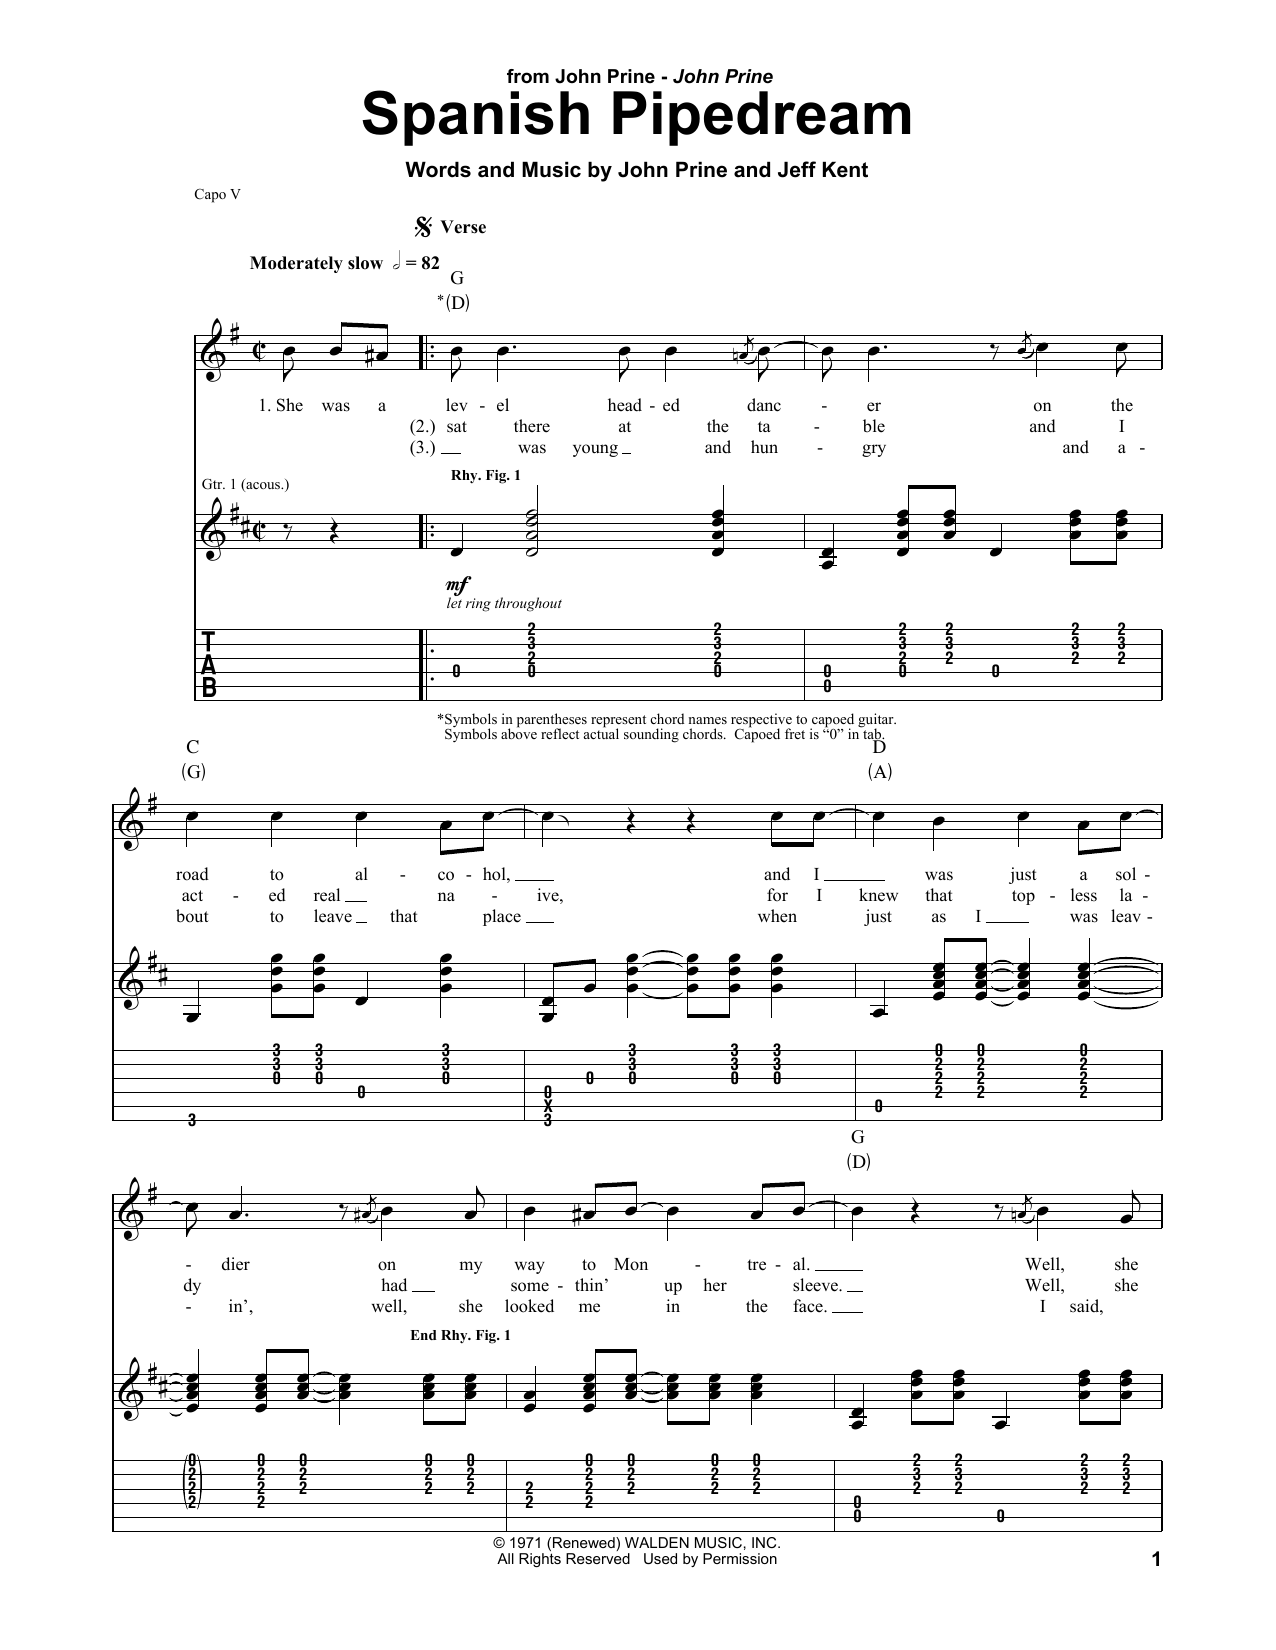 John Prine Spanish Pipedream Sheet Music Notes & Chords for Ukulele - Download or Print PDF